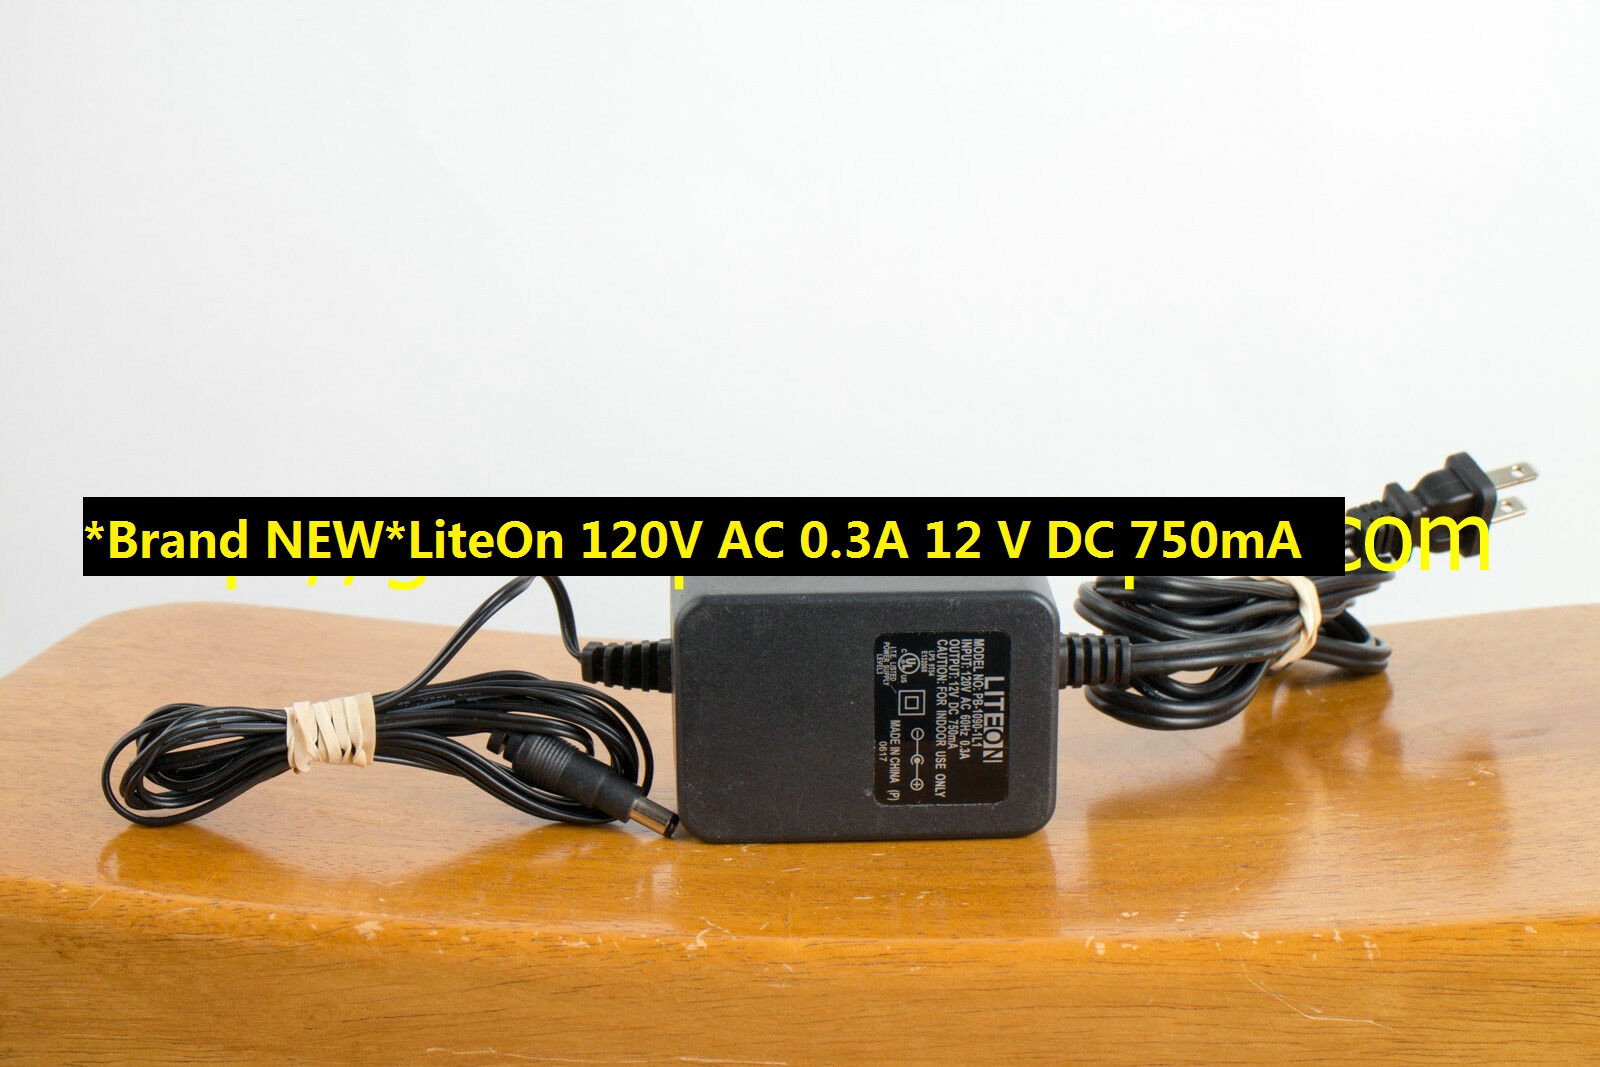 *100% Brand NEW*LiteOn PB-1090-1L1 120V AC 0.3A 12 V DC 750mA AC Adapter Power Supply